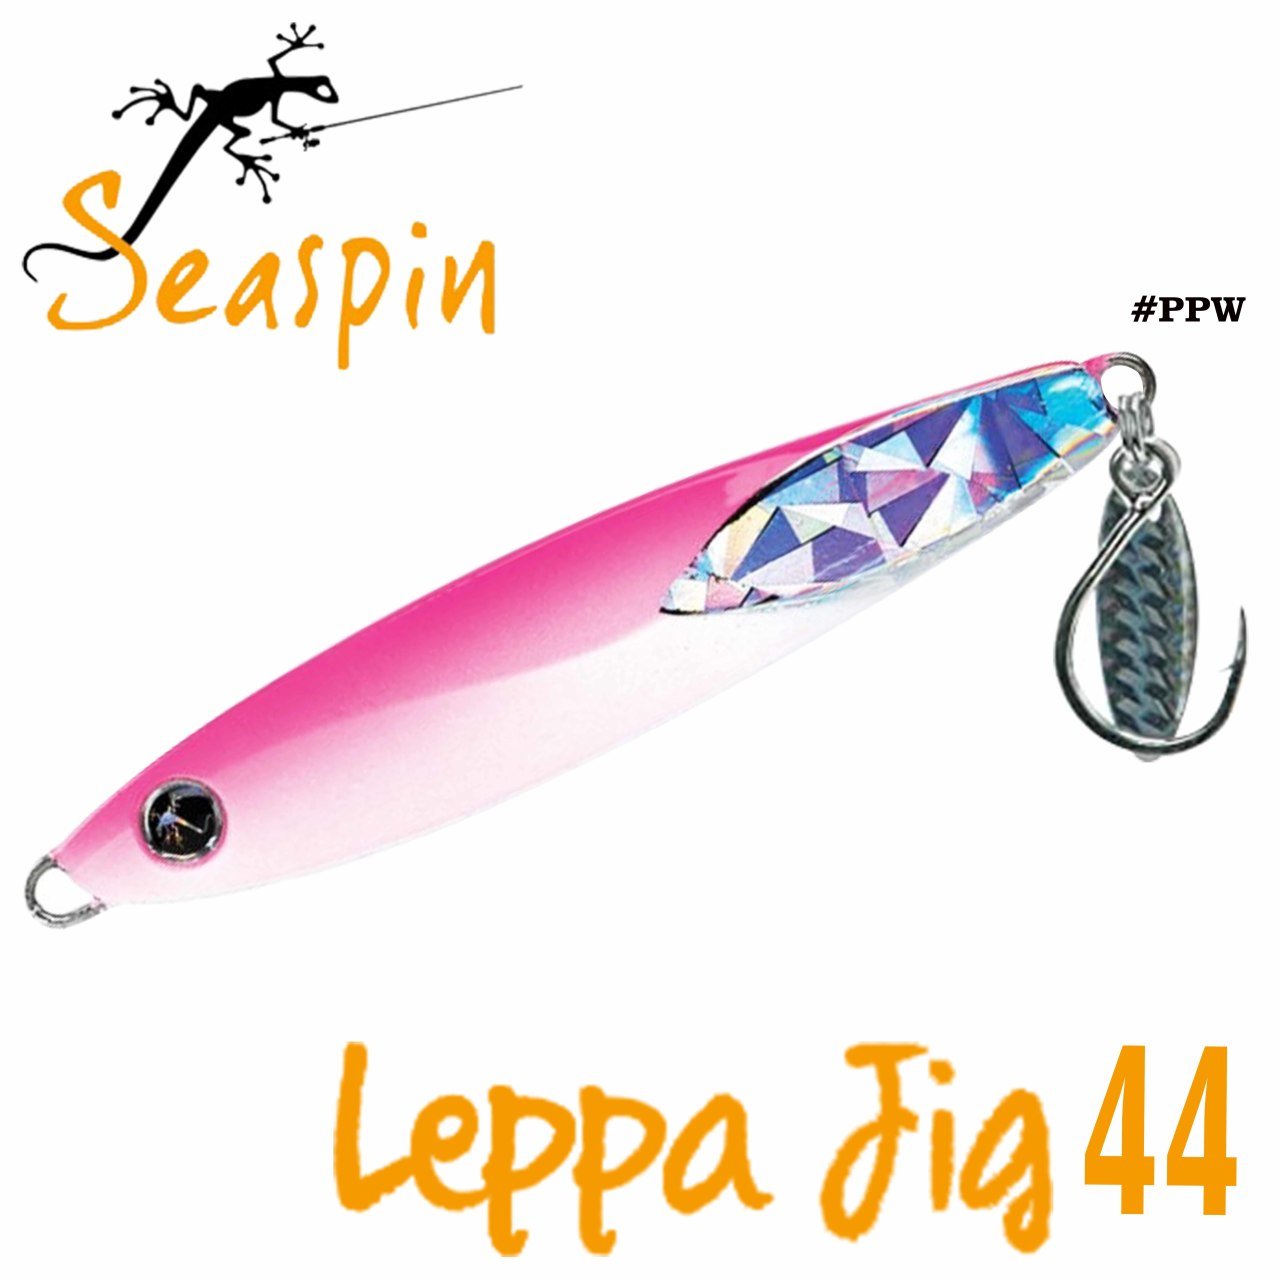 Seaspin Leppa 44gr jig yem #PPW